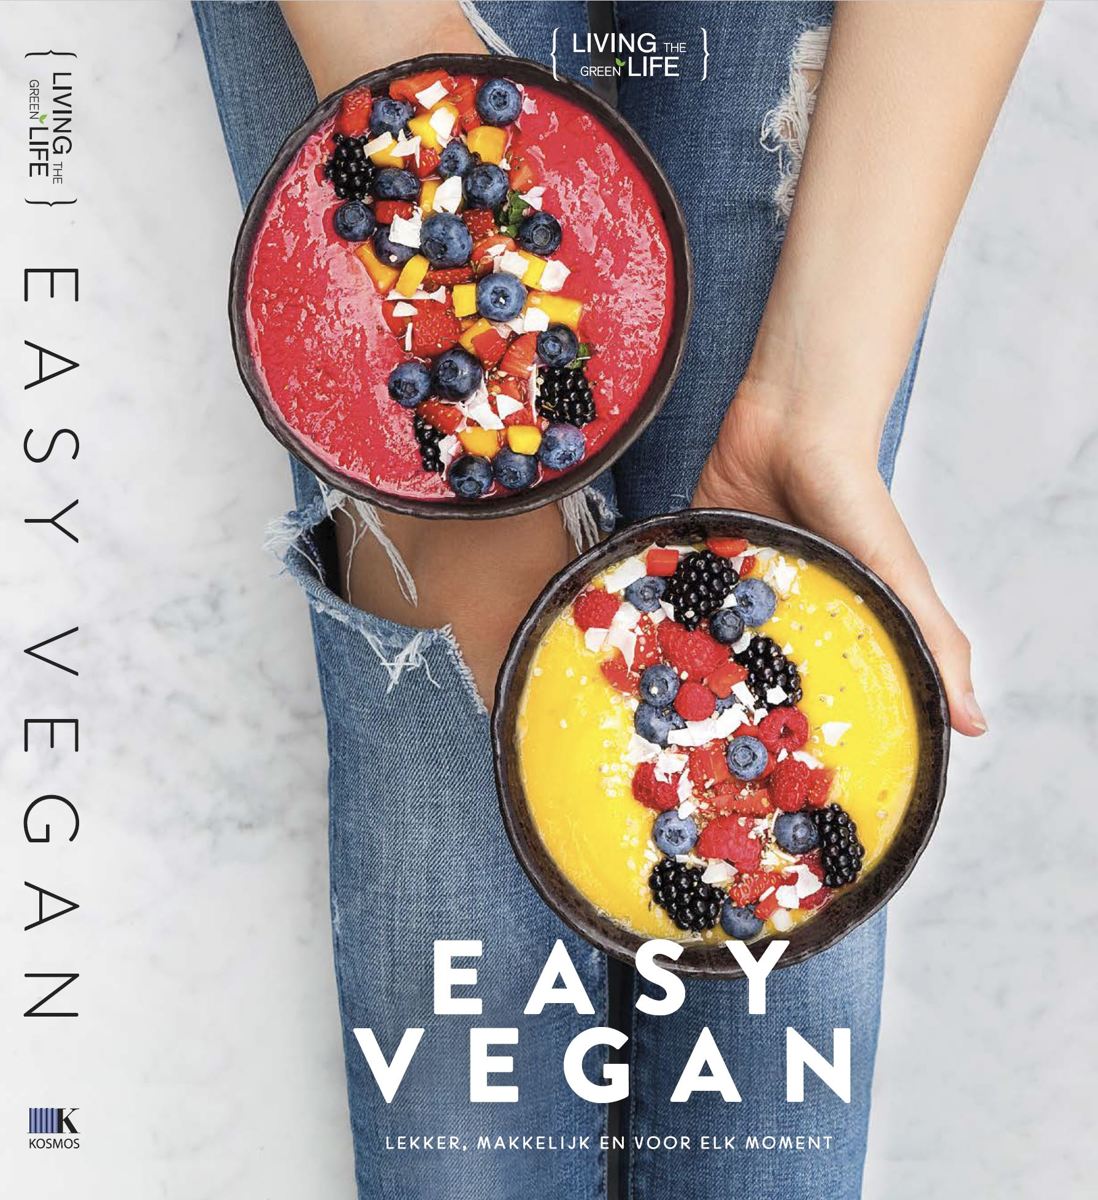 Easy vegan